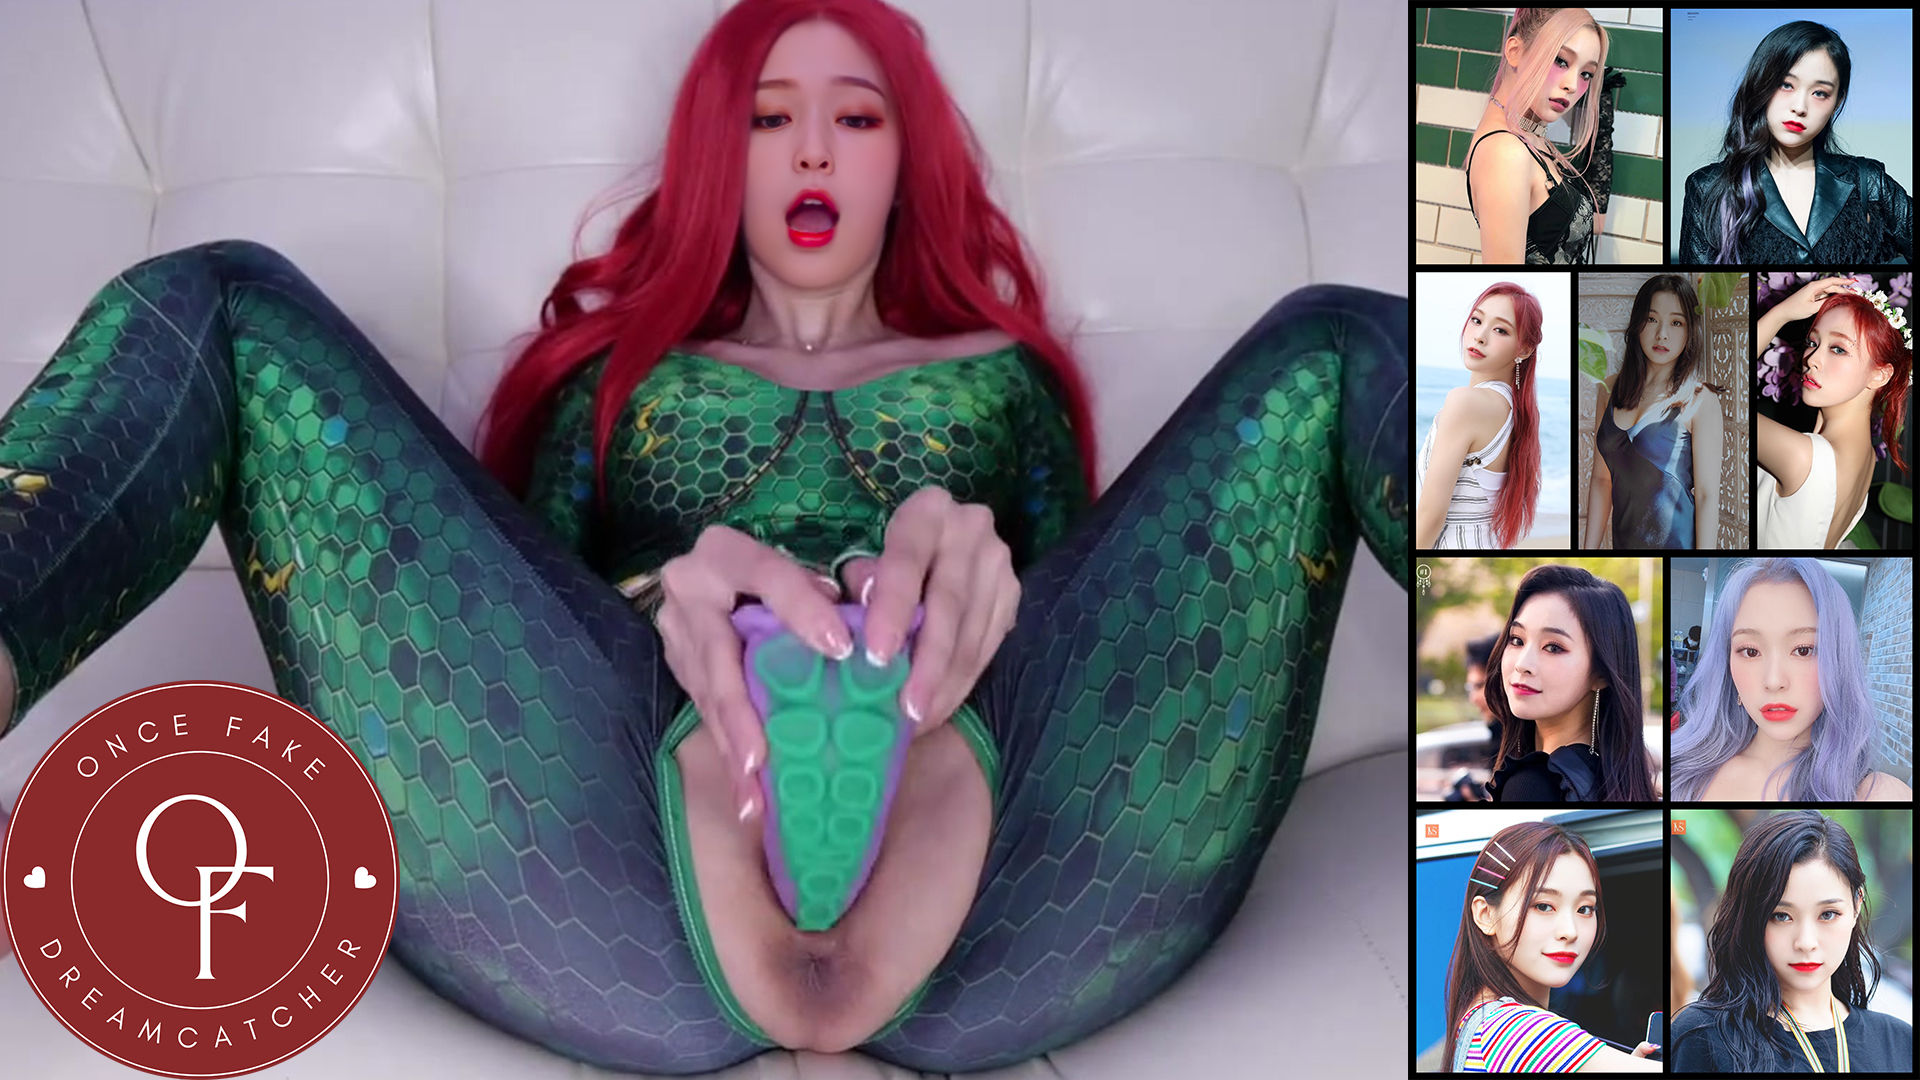 Costume Girls Getting Fucked - Dreamcatcher Gahyeon Fucked in her Mera Costume DeepFake Porn - MrDeepFakes